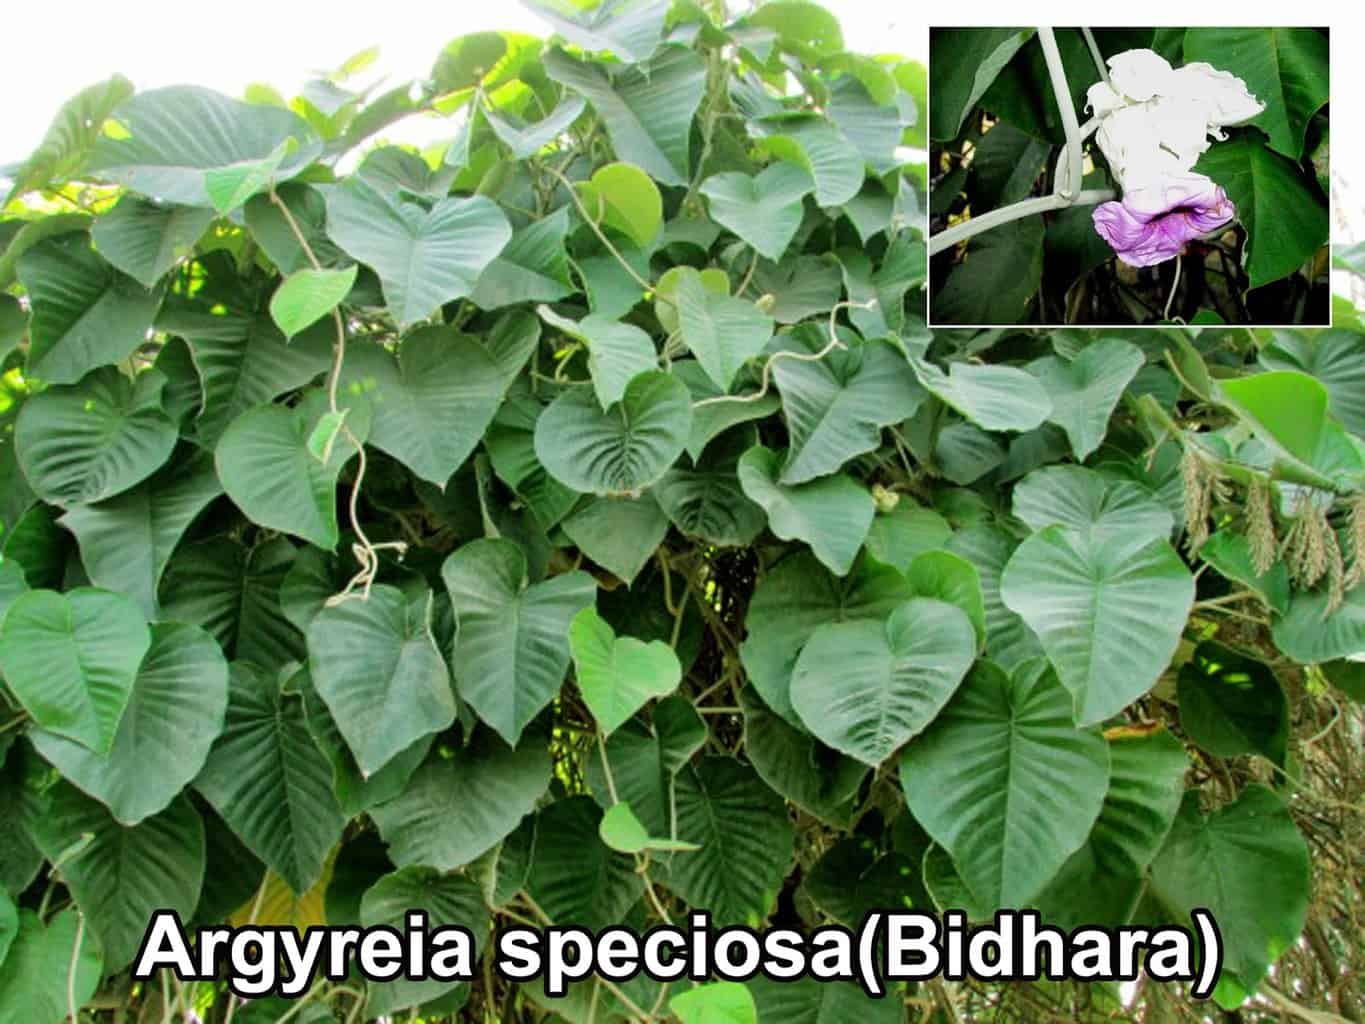 vidhara plant benefits